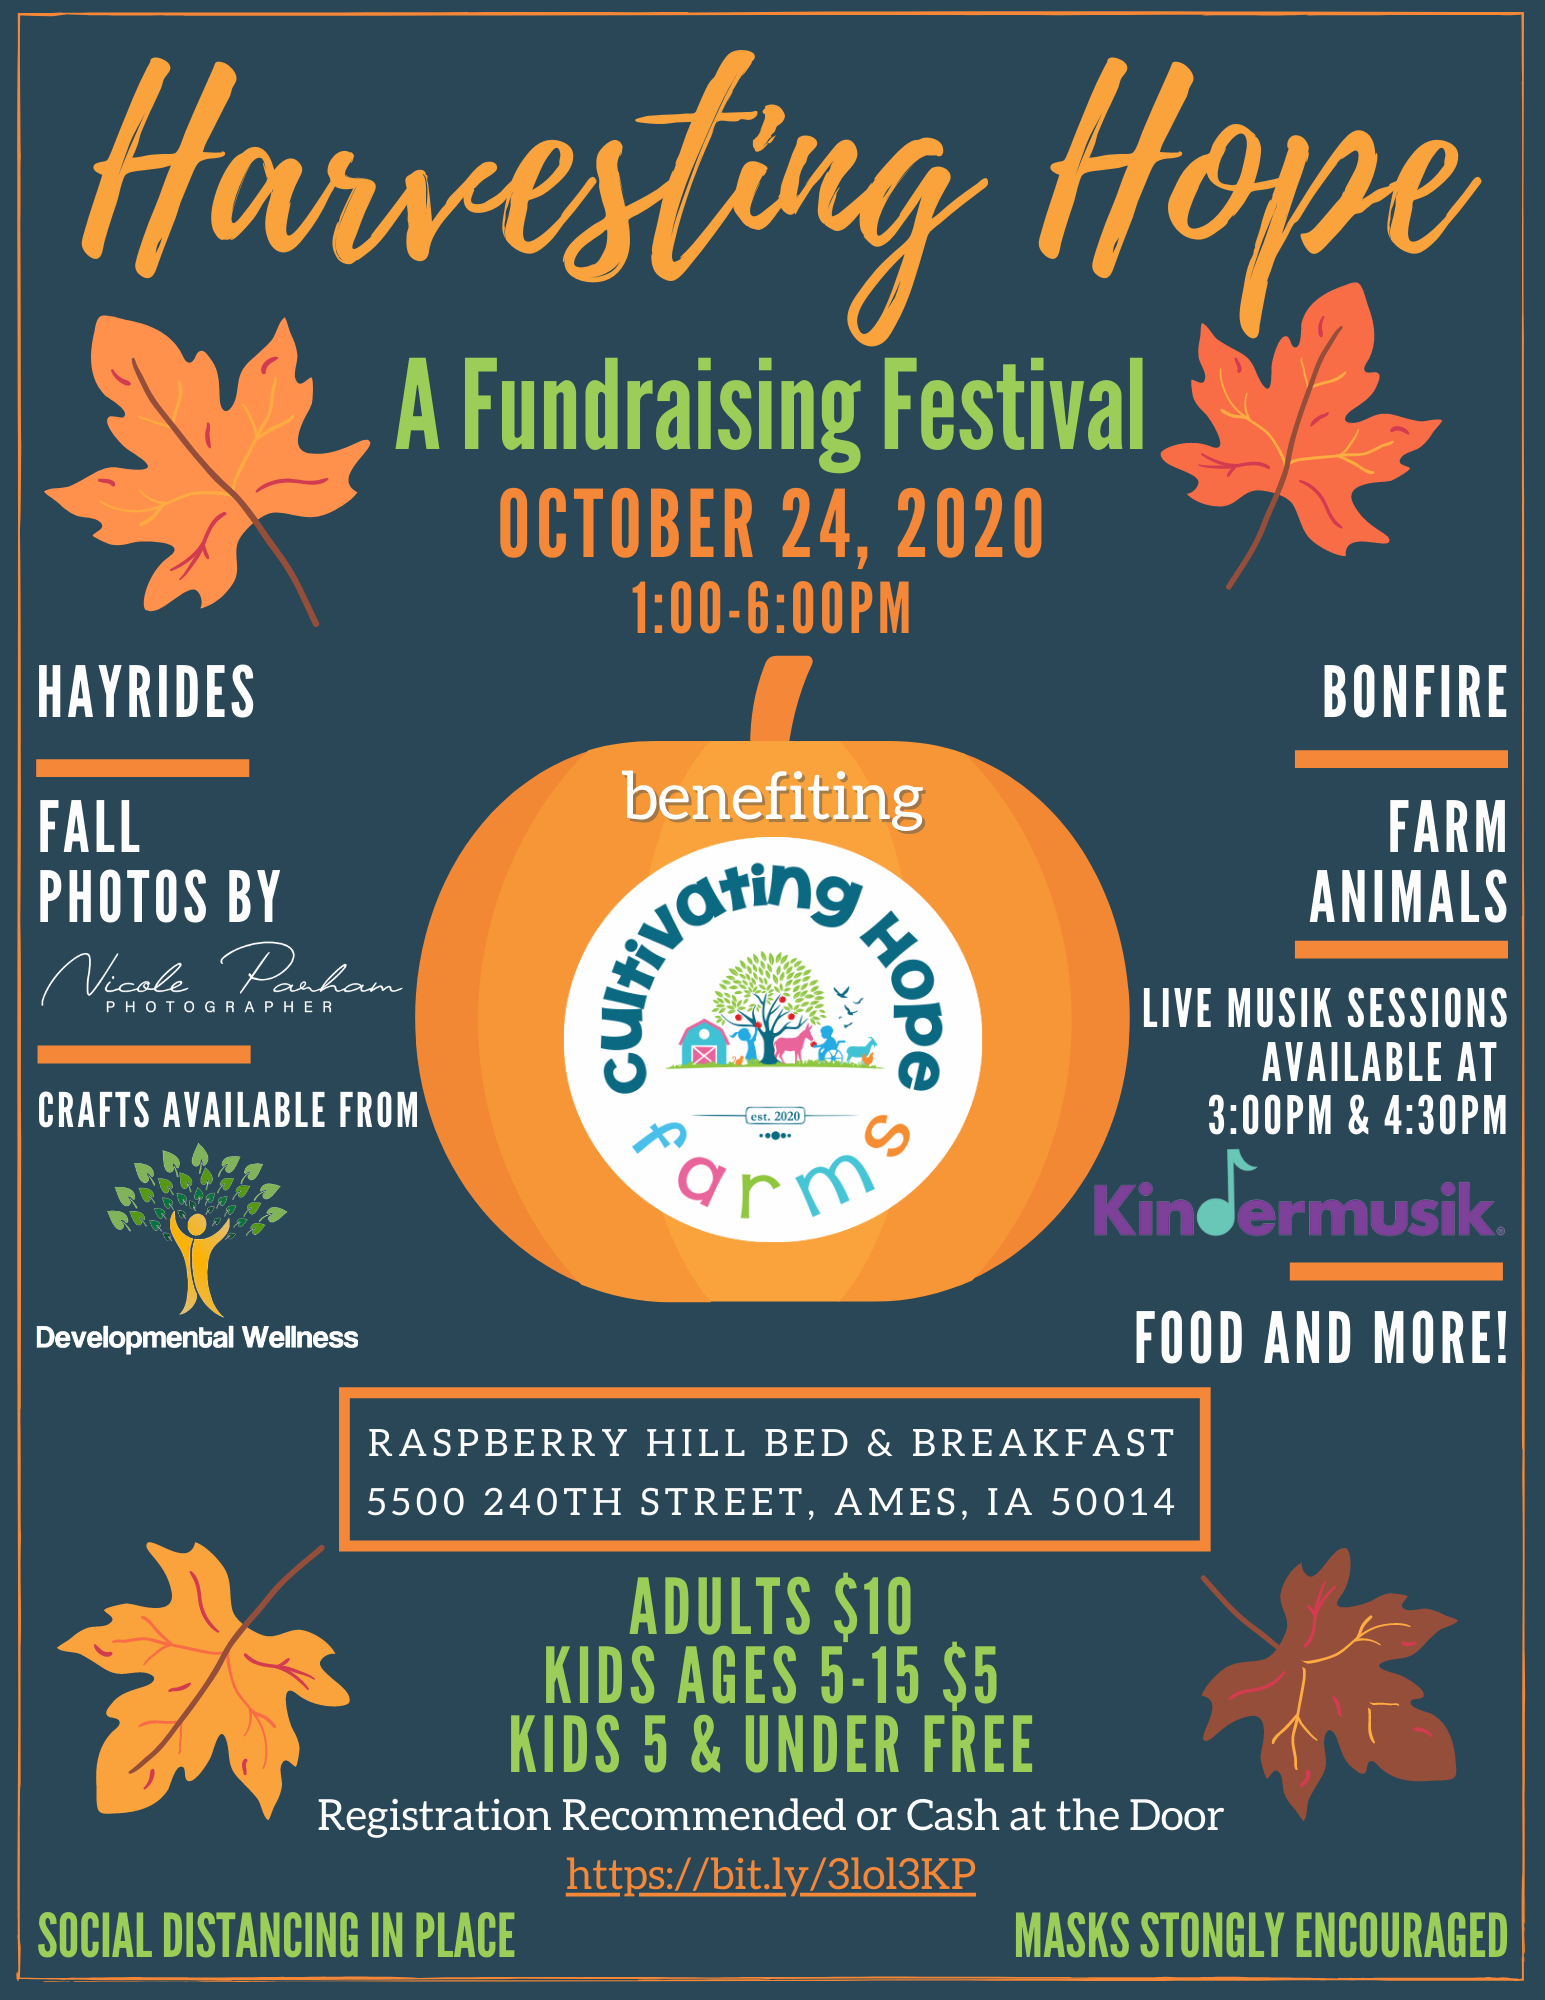 Harvesting Hope: A Fundraising Festival